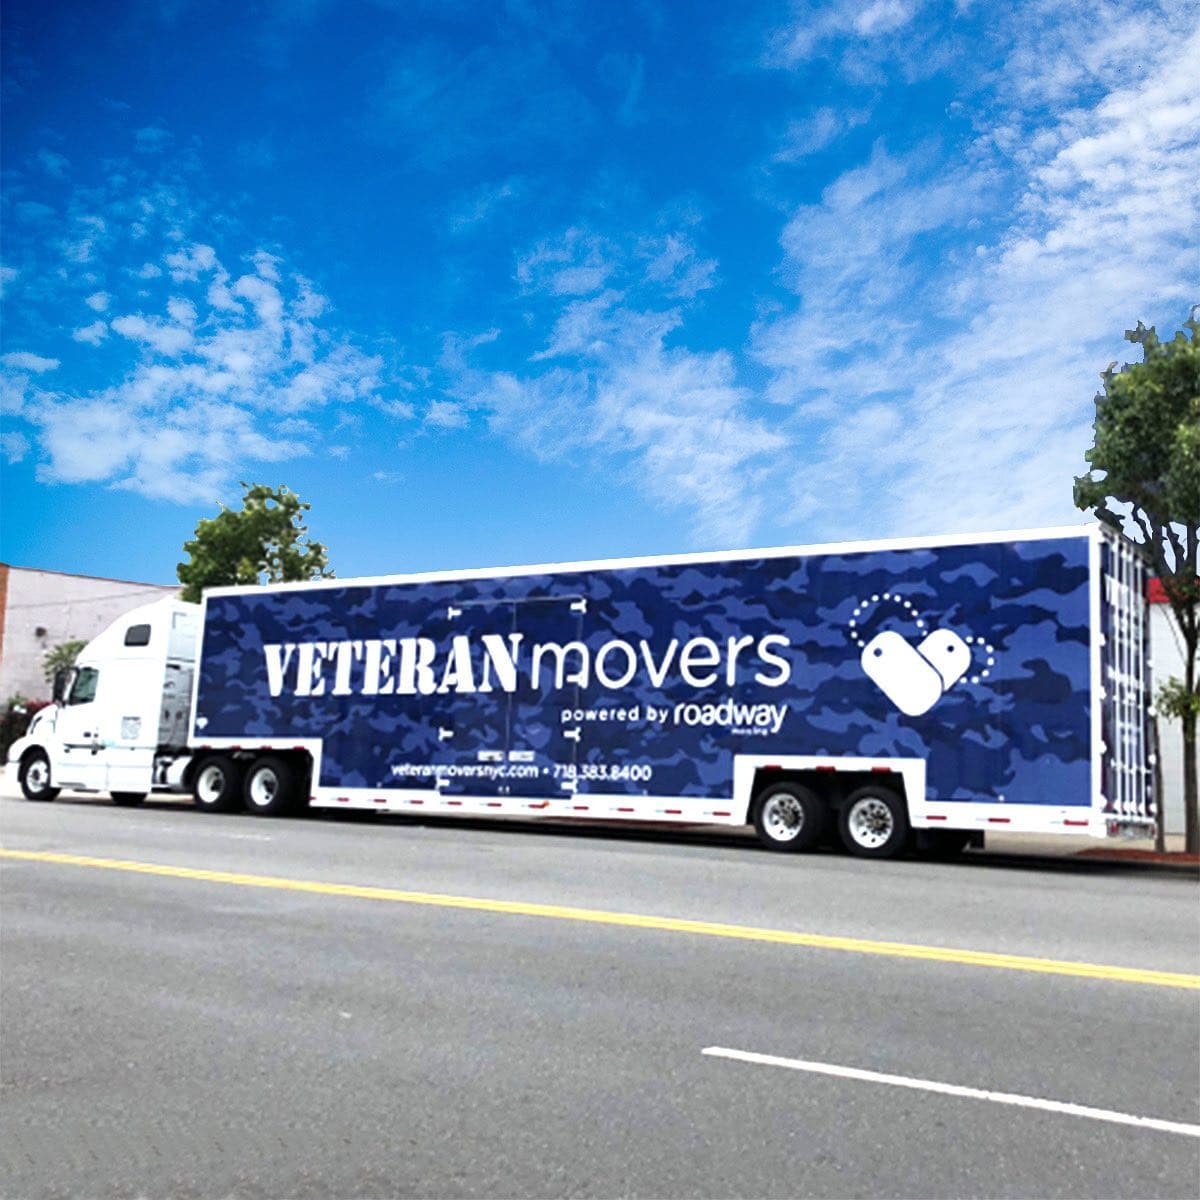 Veteran Movers NYC